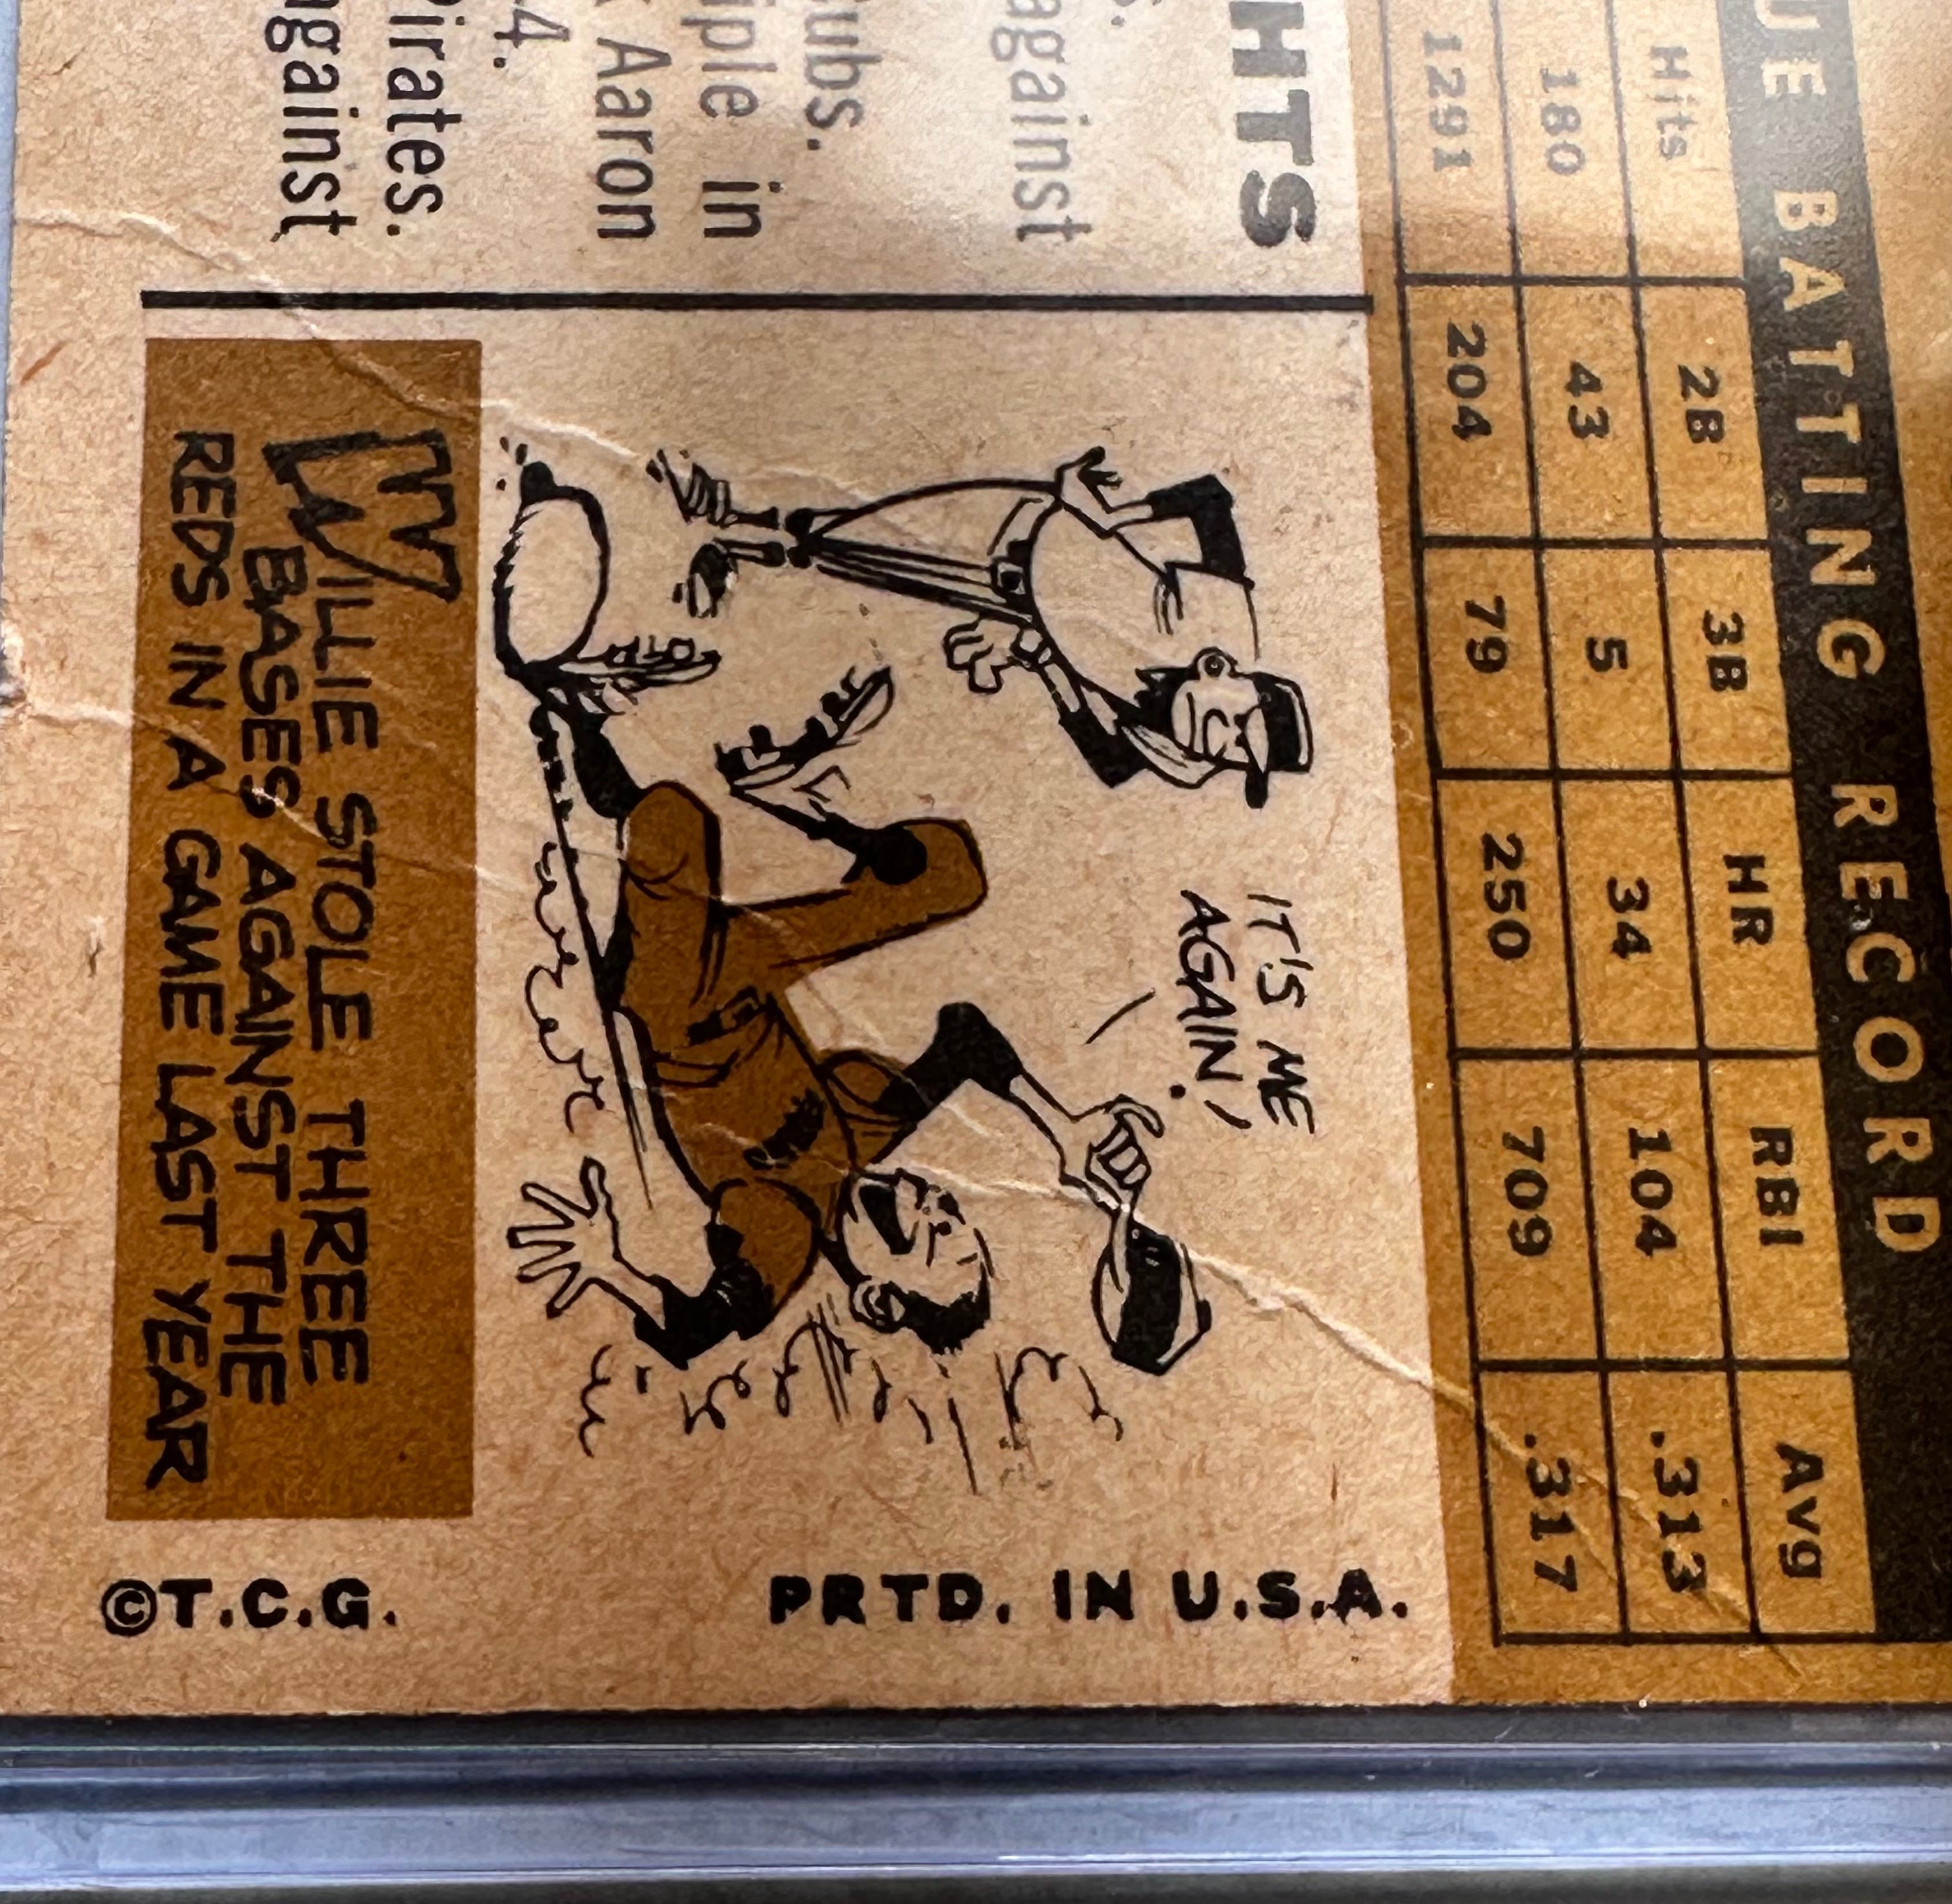 Willie Mays rare baseball card 1960